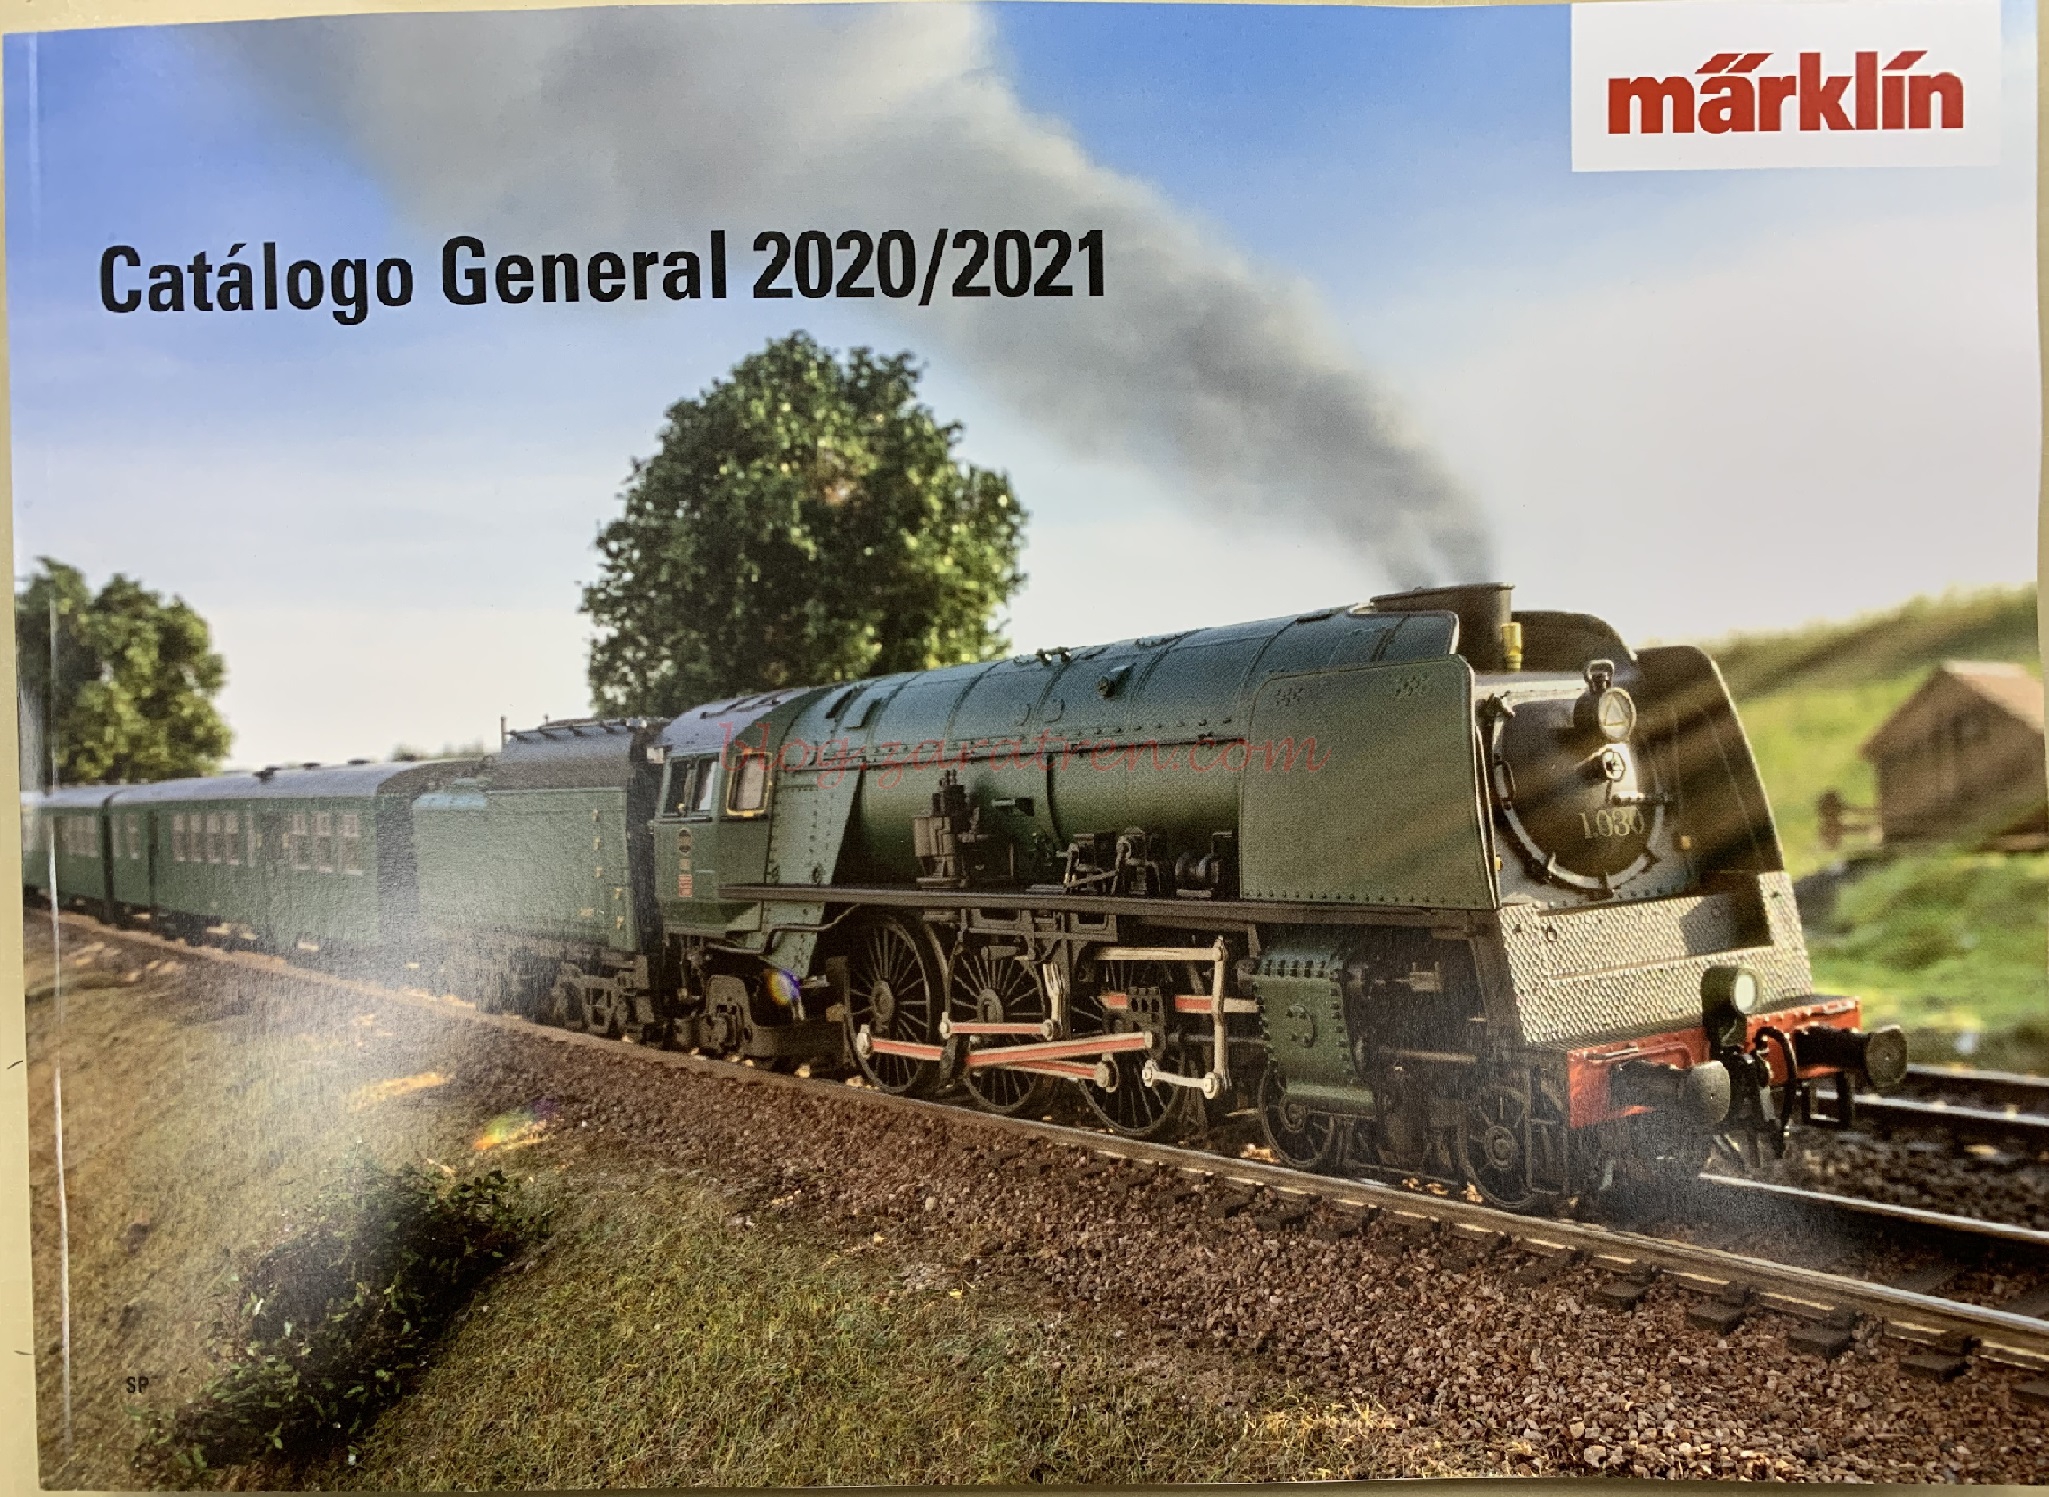 Marklin – Catalogo General Marklin 2020/2021, en Castellano, Ref: 15716.